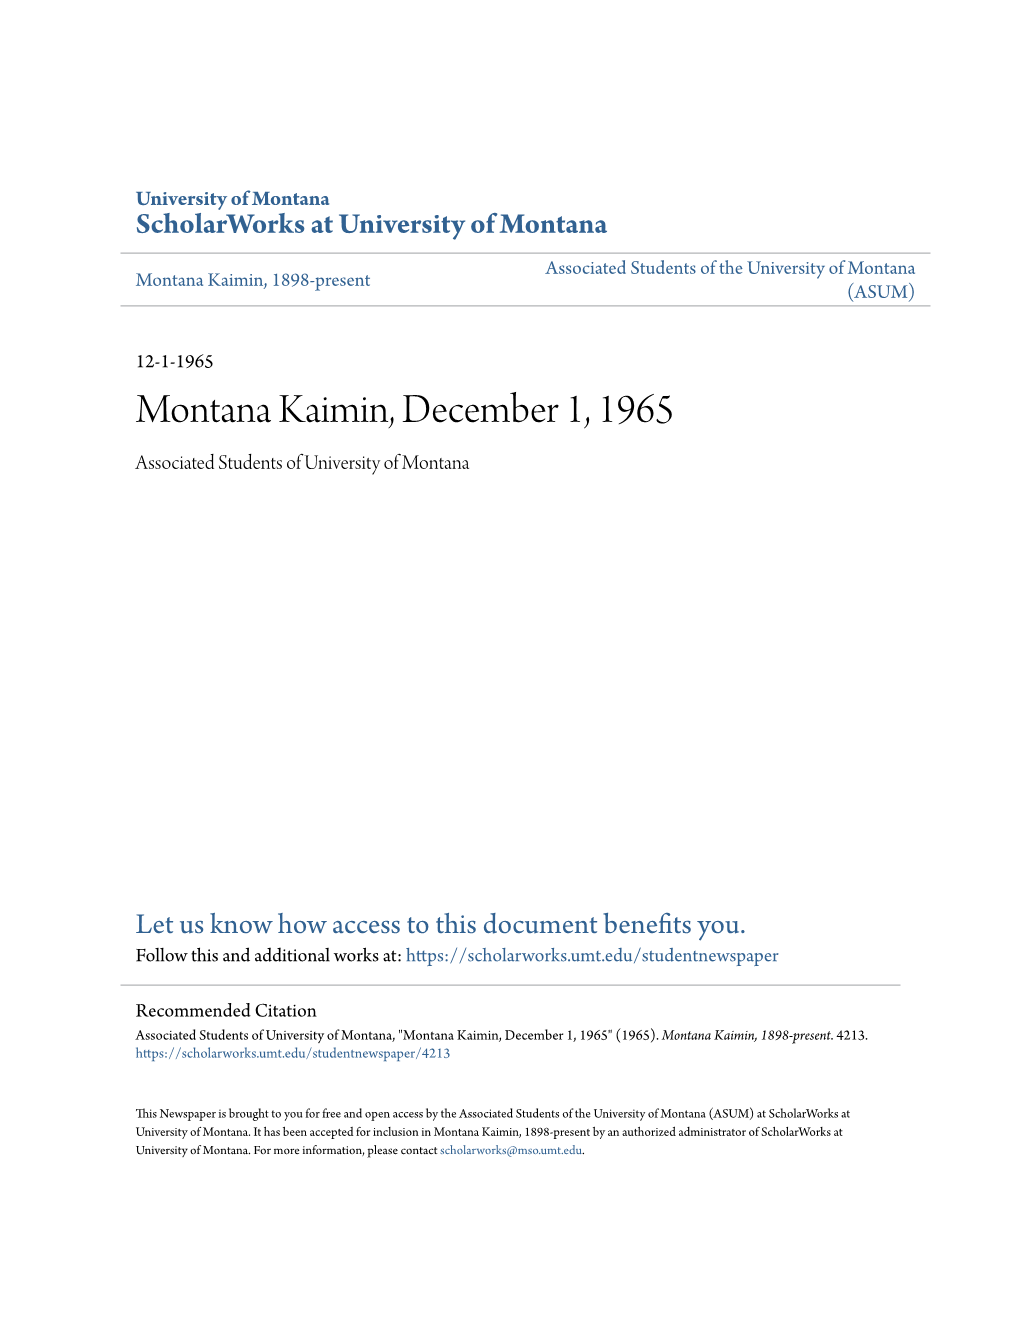 Montana Kaimin, December 1, 1965 Associated Students of University of Montana